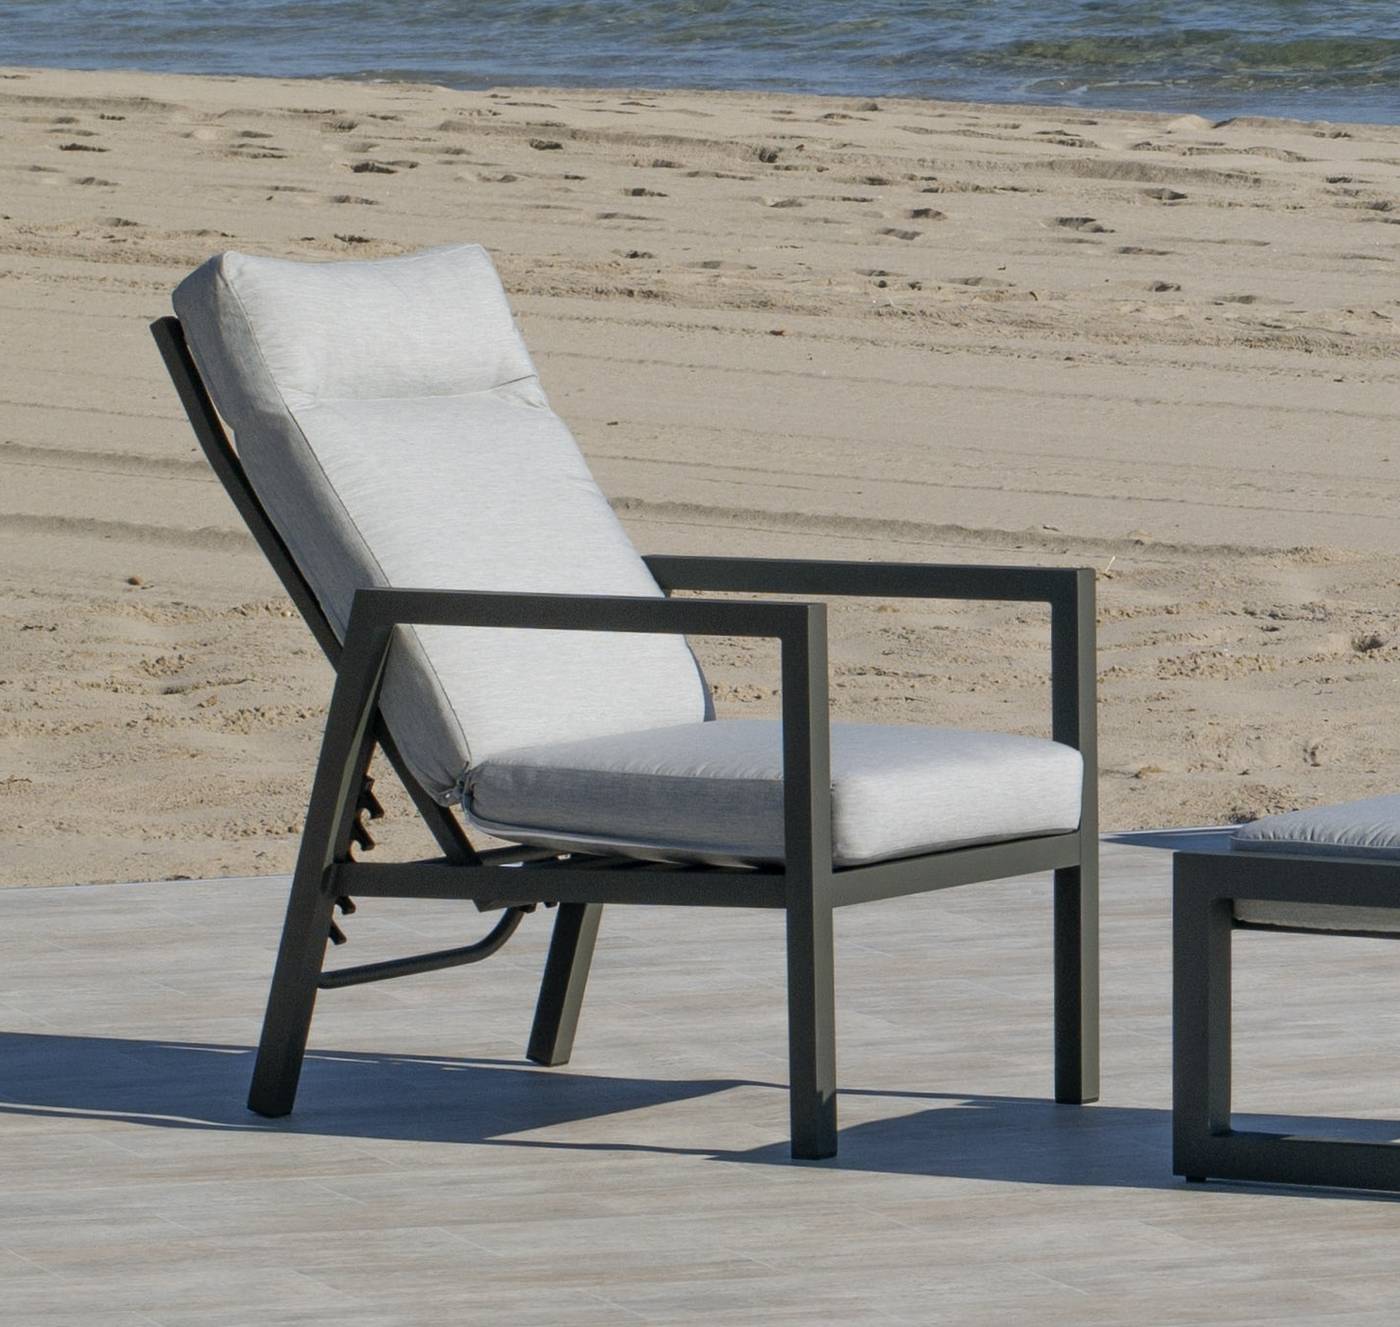 Set Aluminio Voriam-11 - Conjunto aluminio: sofá 3 plazas + 2 sillones + mesa de centro alta + 2 taburetes. Respaldos reclinables. Colores: blanco o antracita.